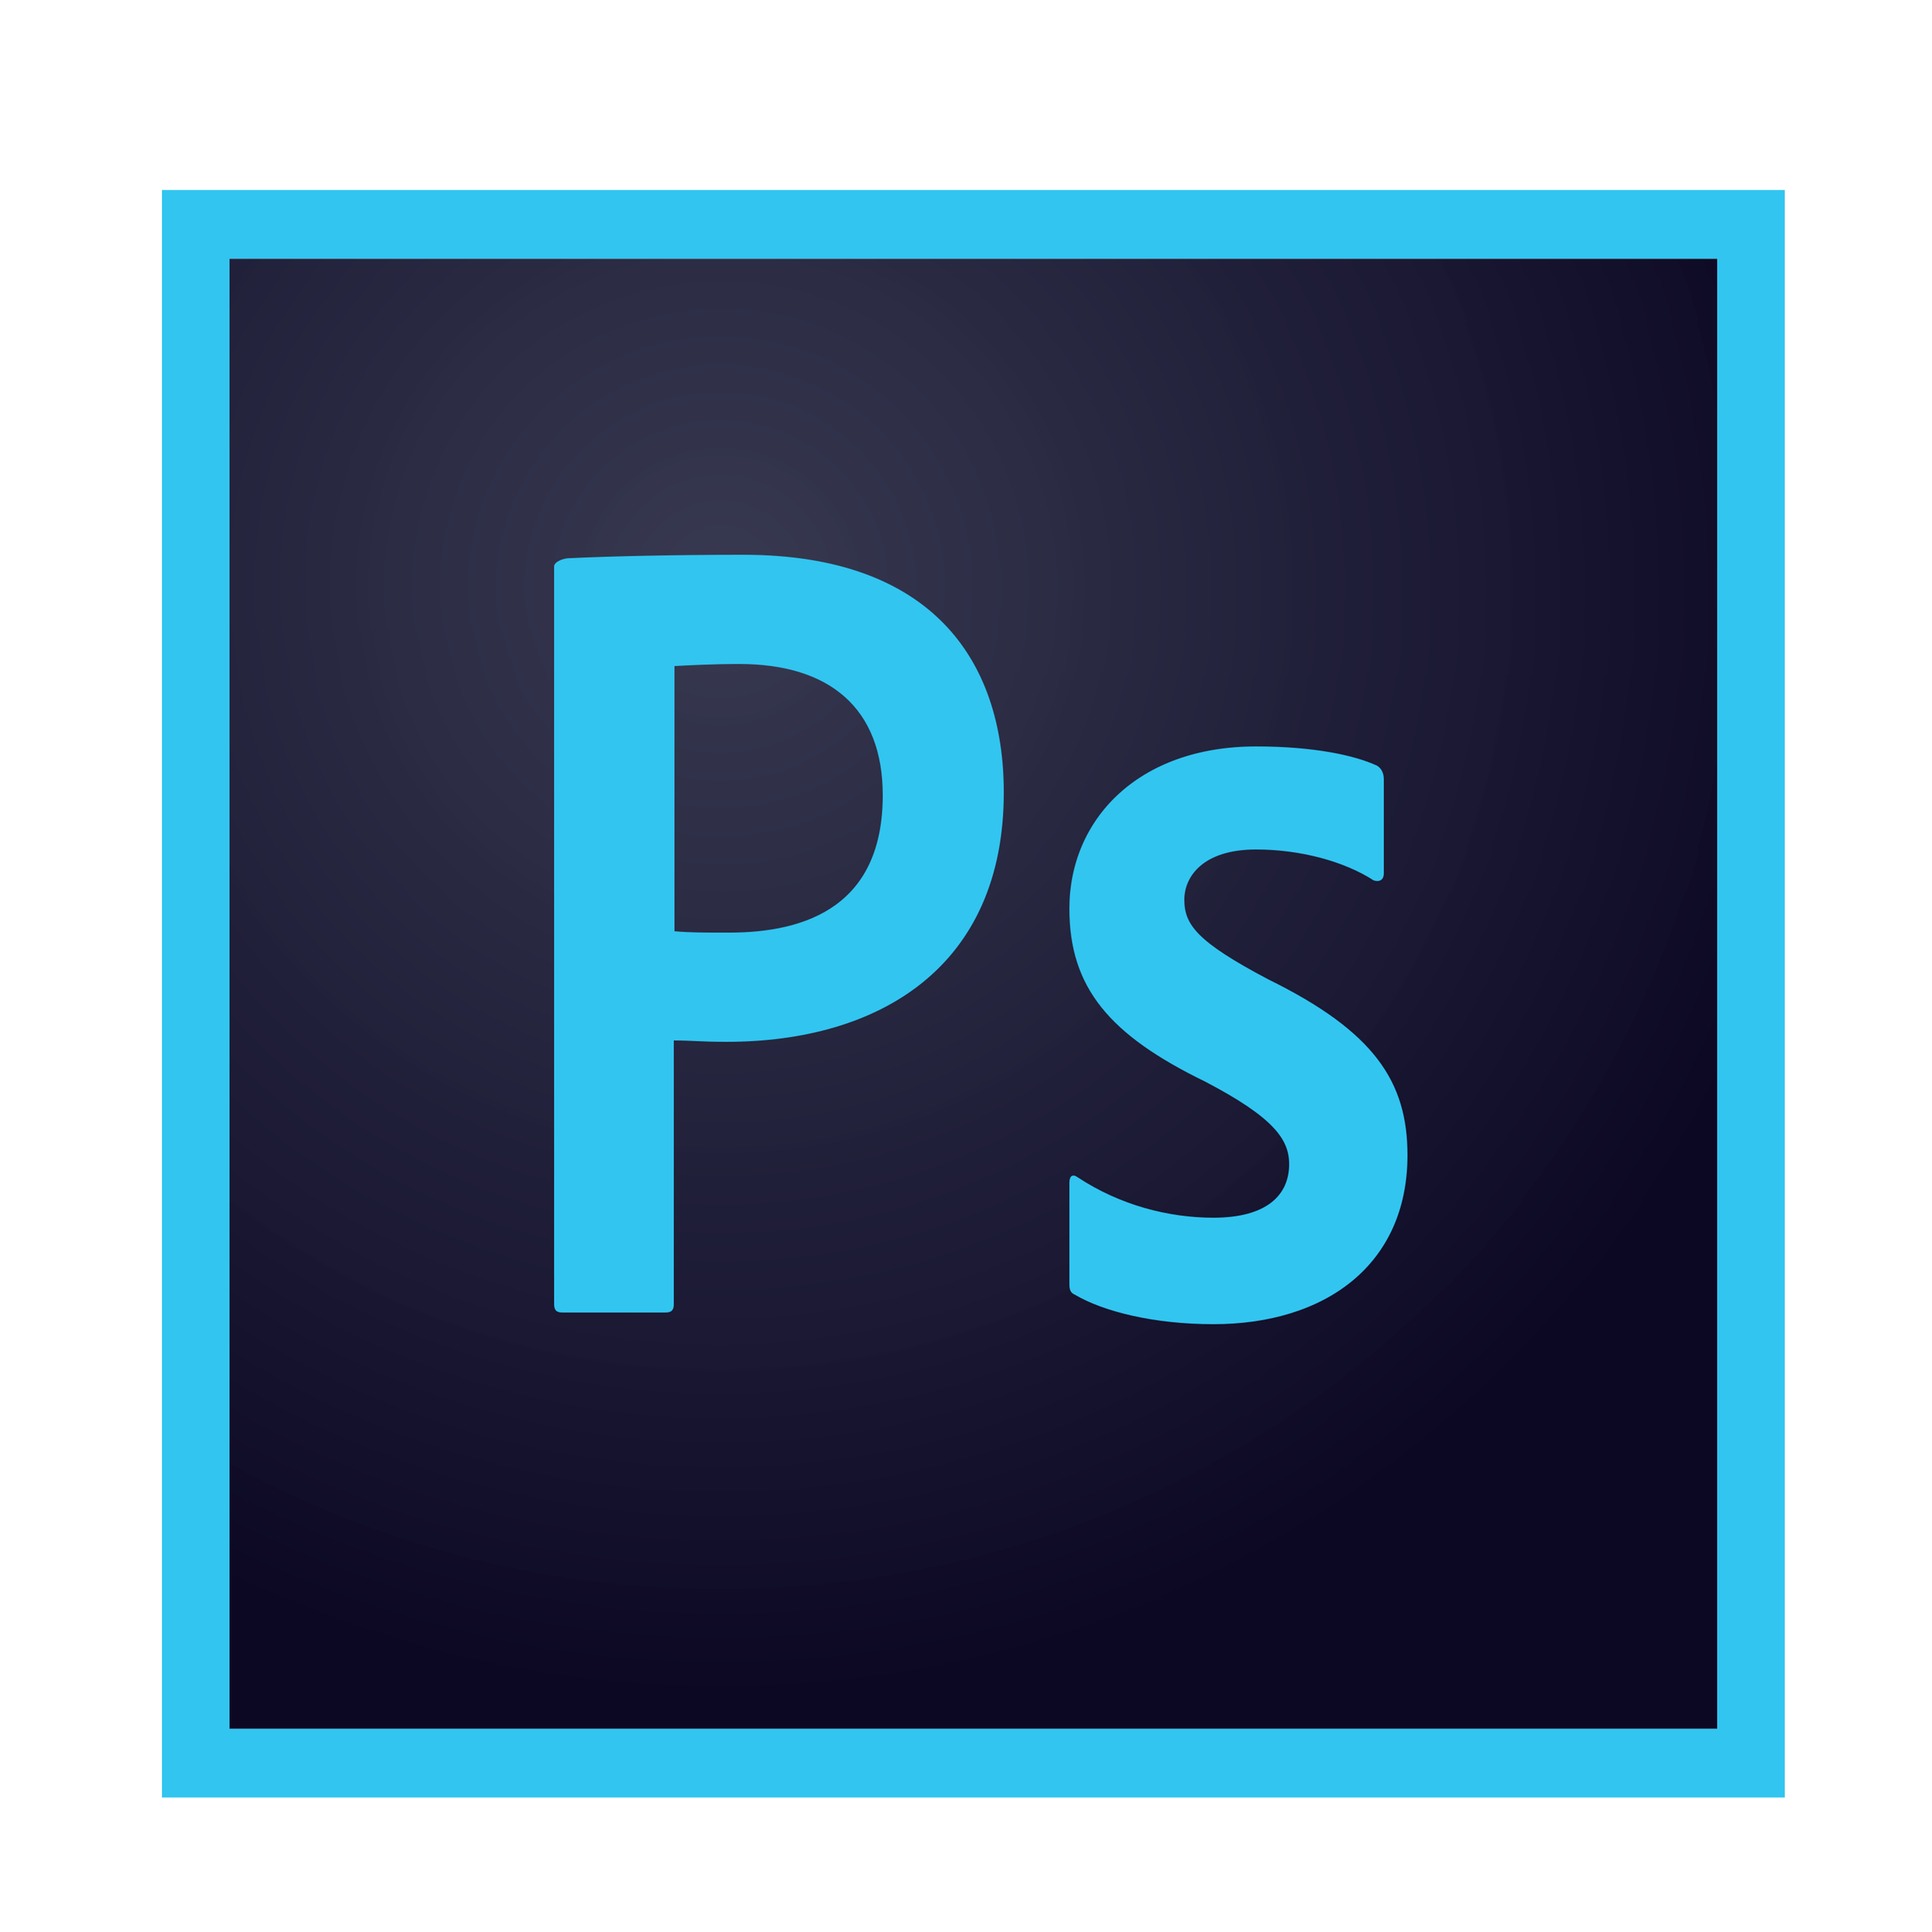 The icon representing Adobe Photoshop